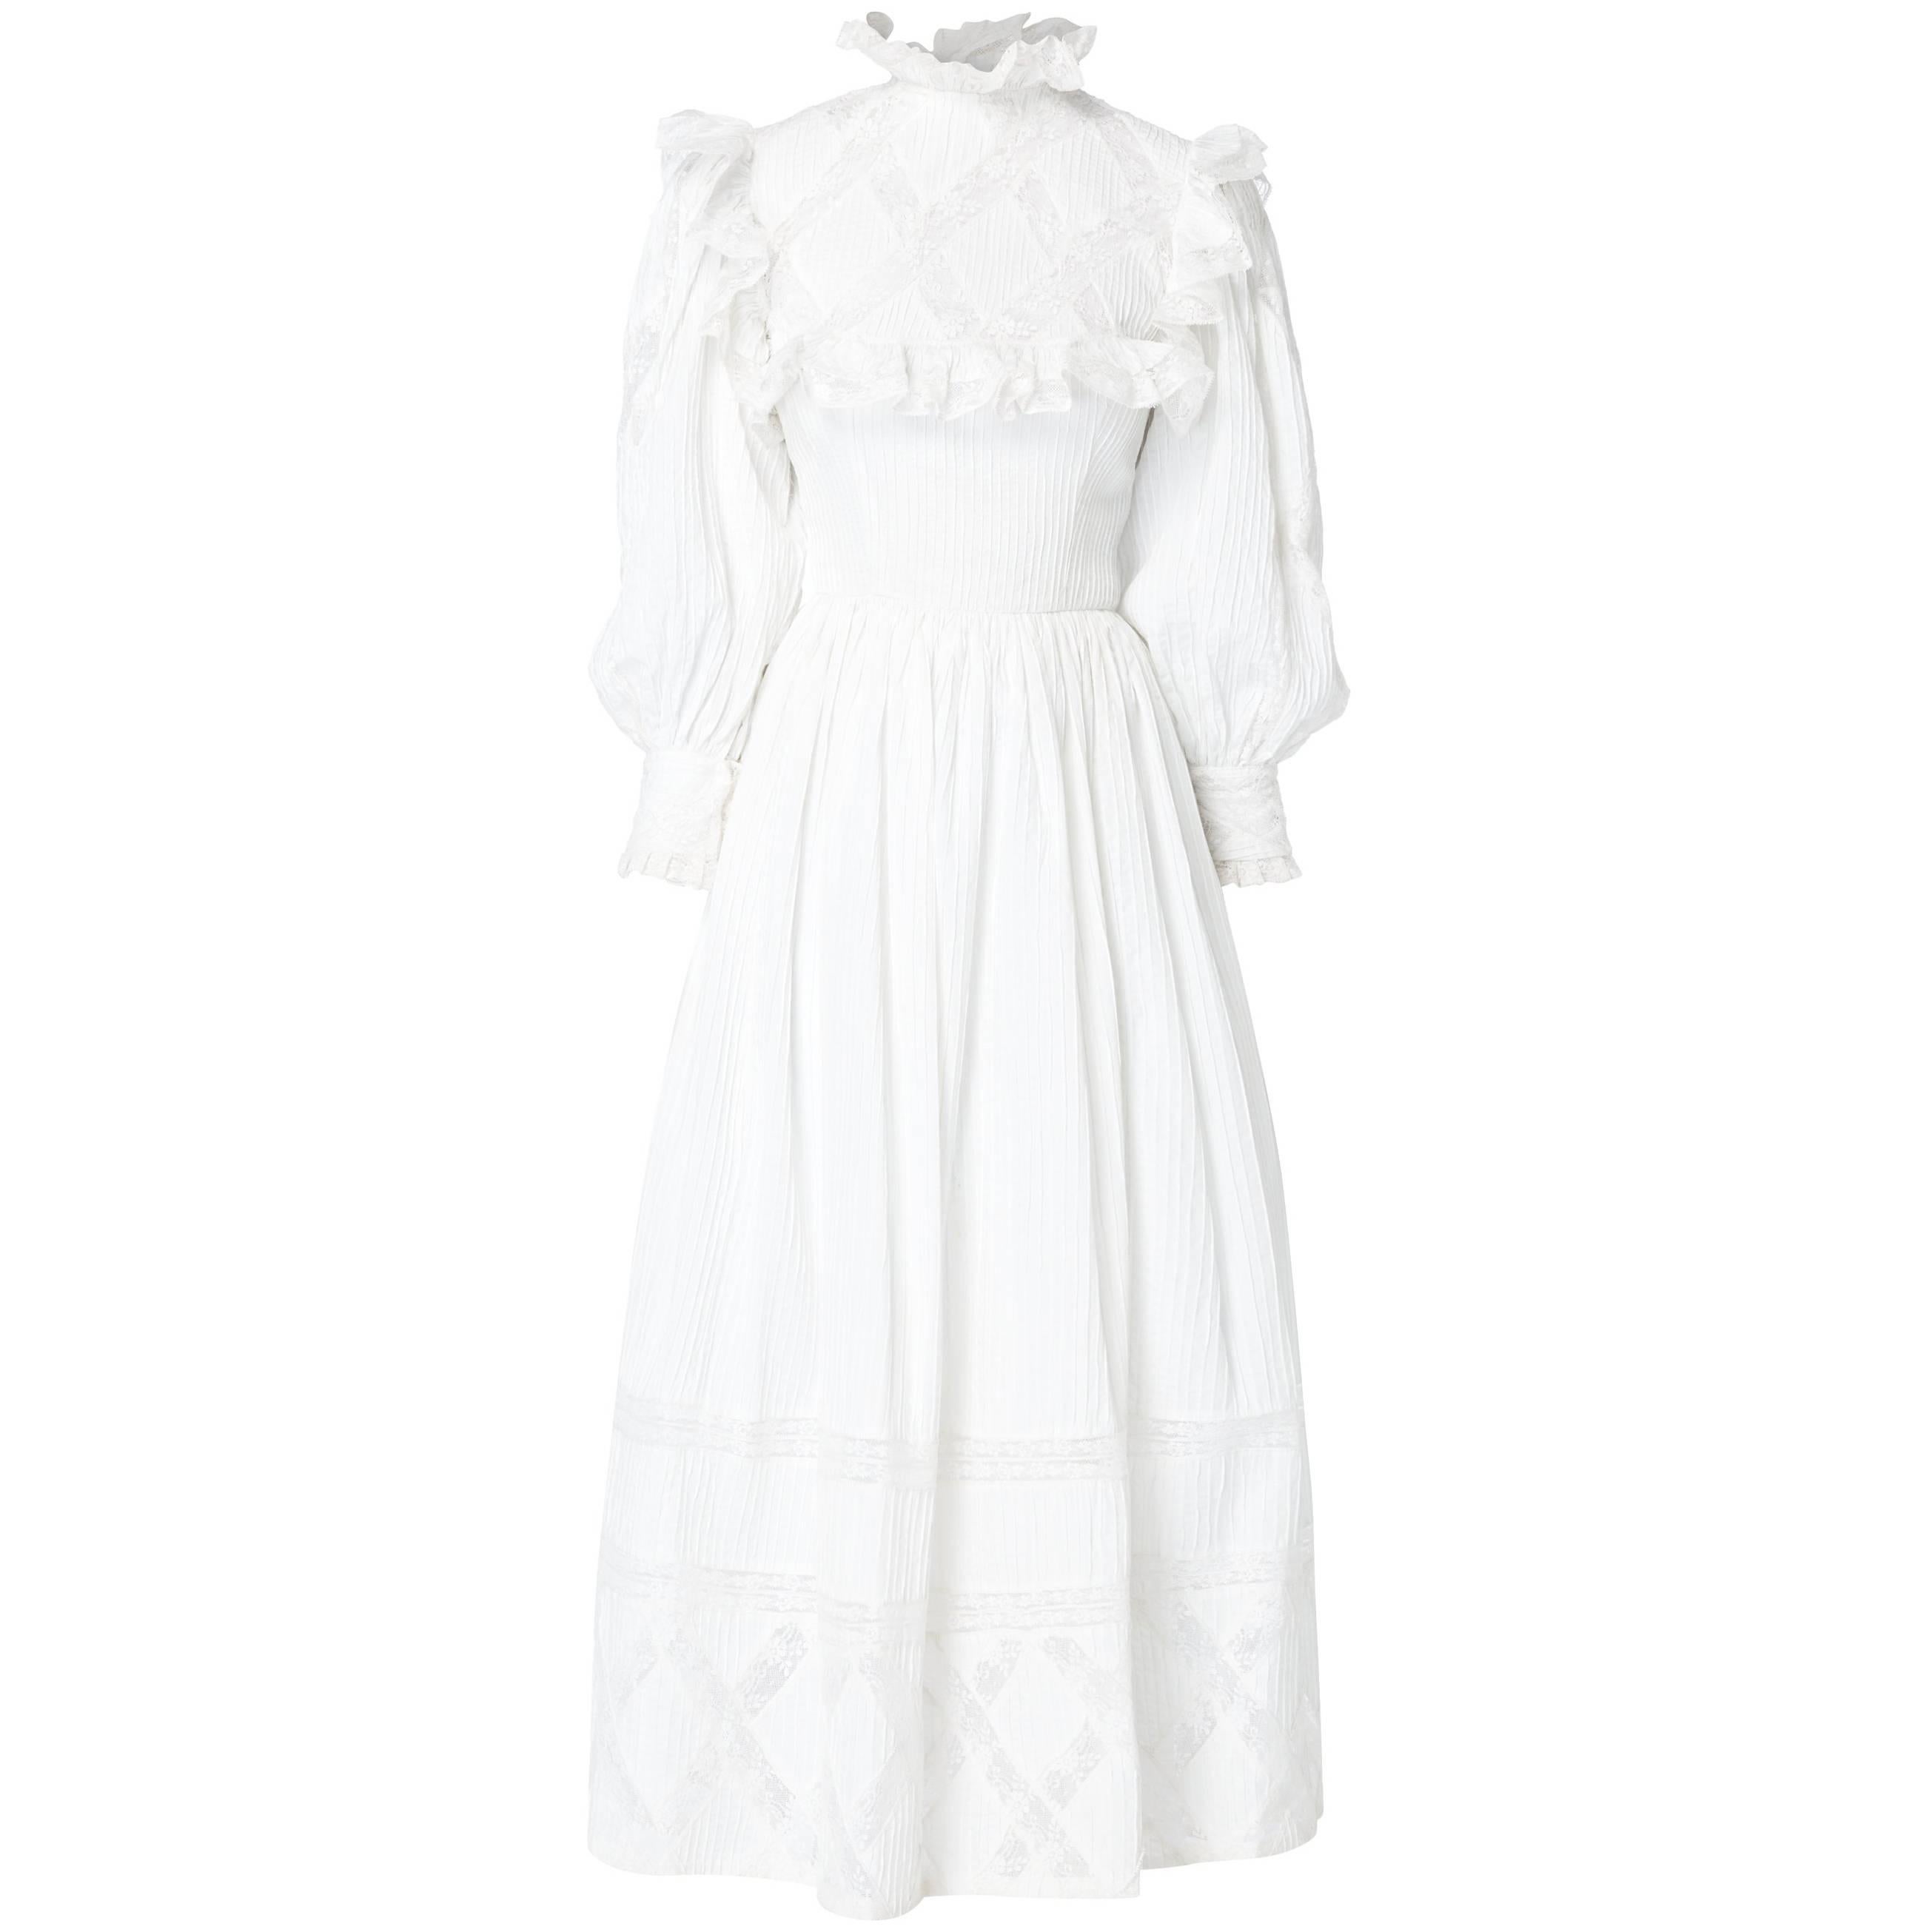 White dress, circa 1971